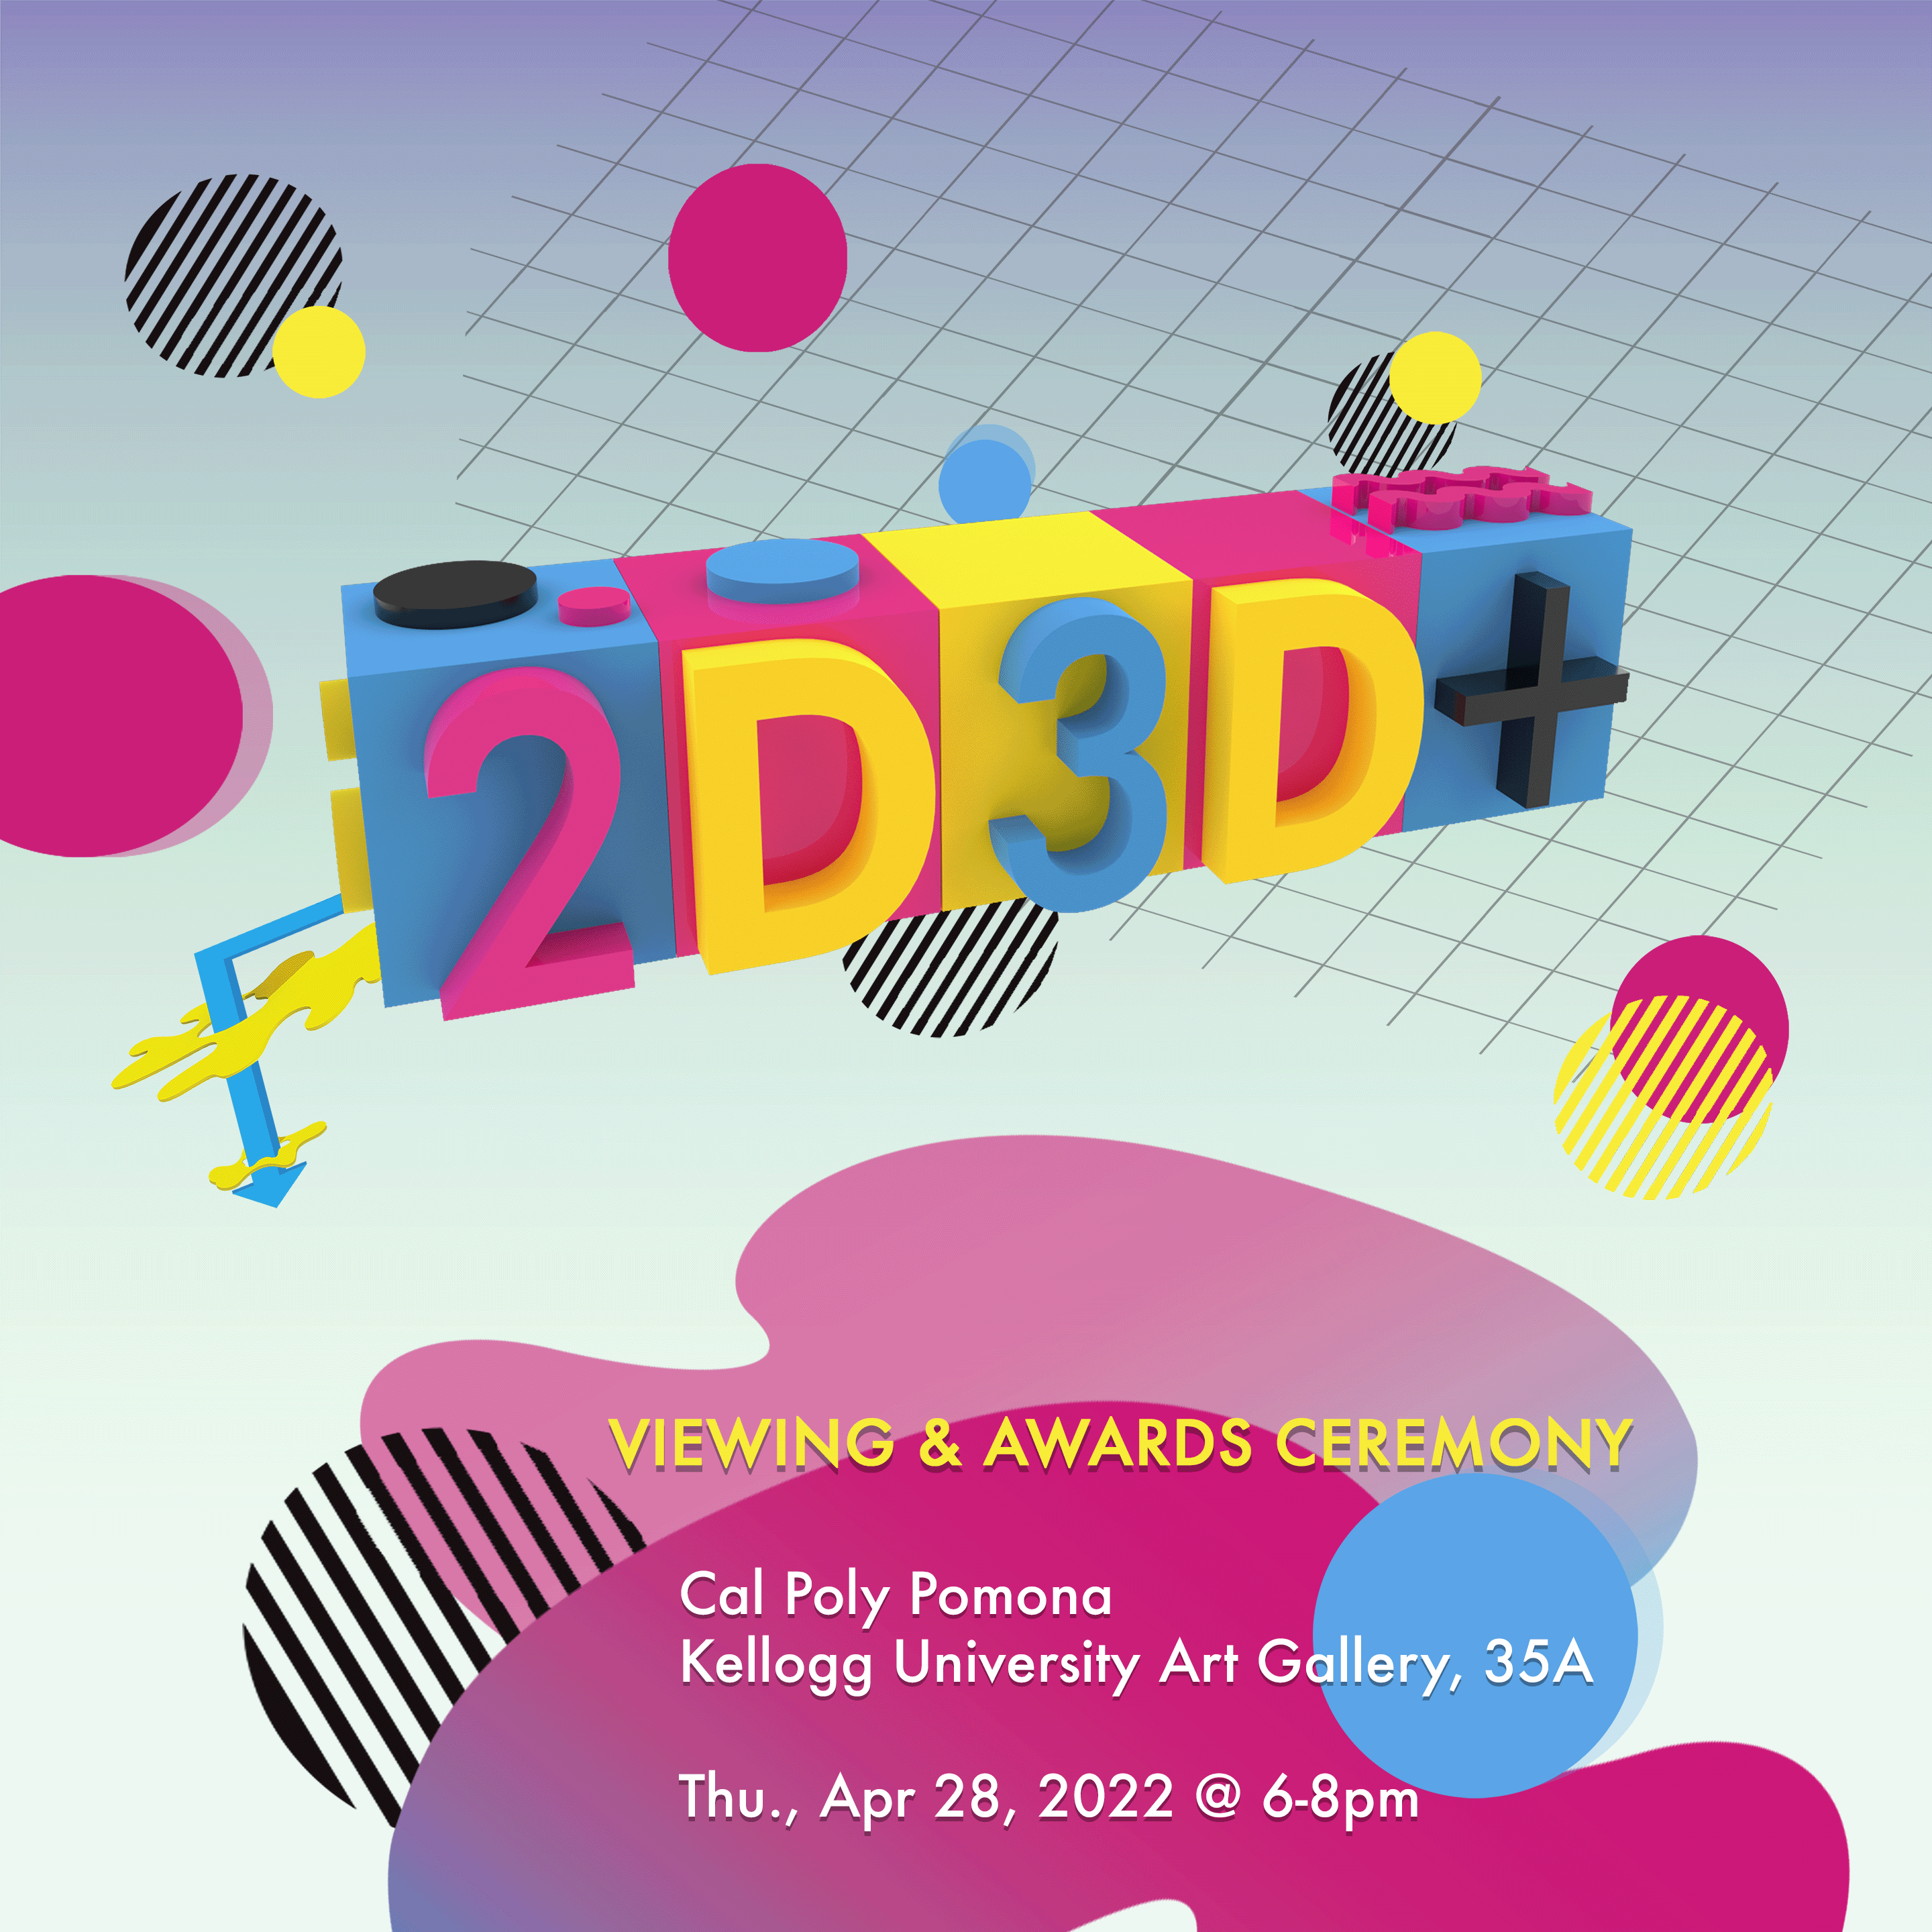 2d3d+ Opening Event & Award Ceremony: Thursday, April 28, 2022, 6-8pm 